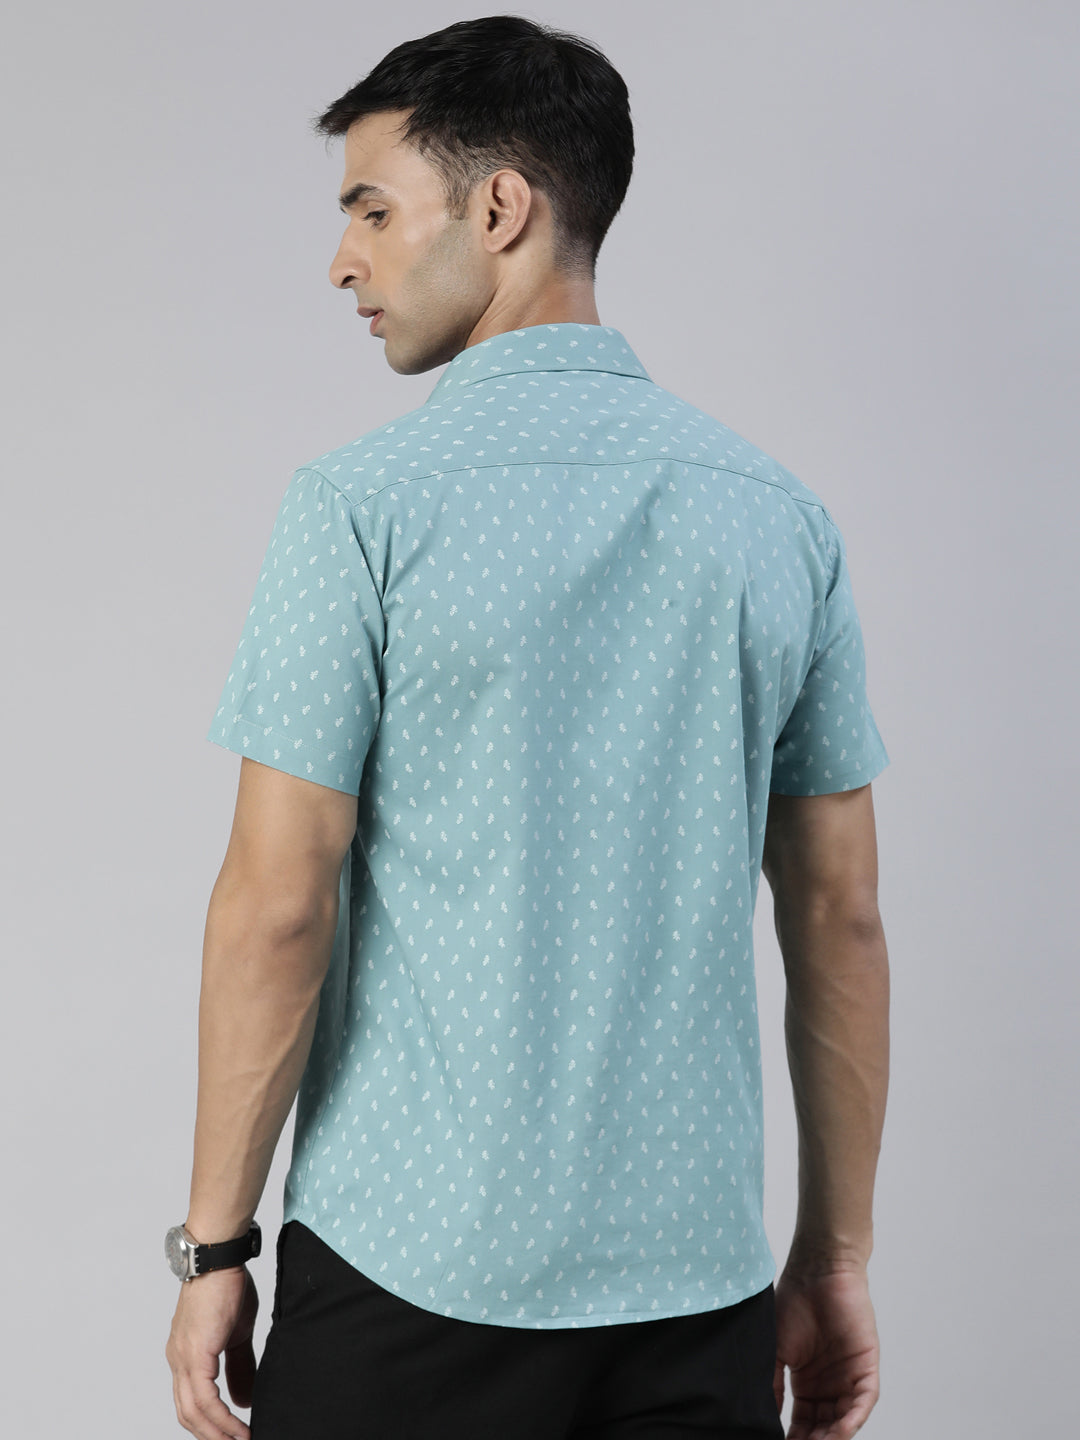 Turquoise Printed Half Sleeves Shirt Printed Shirt Bushirt   